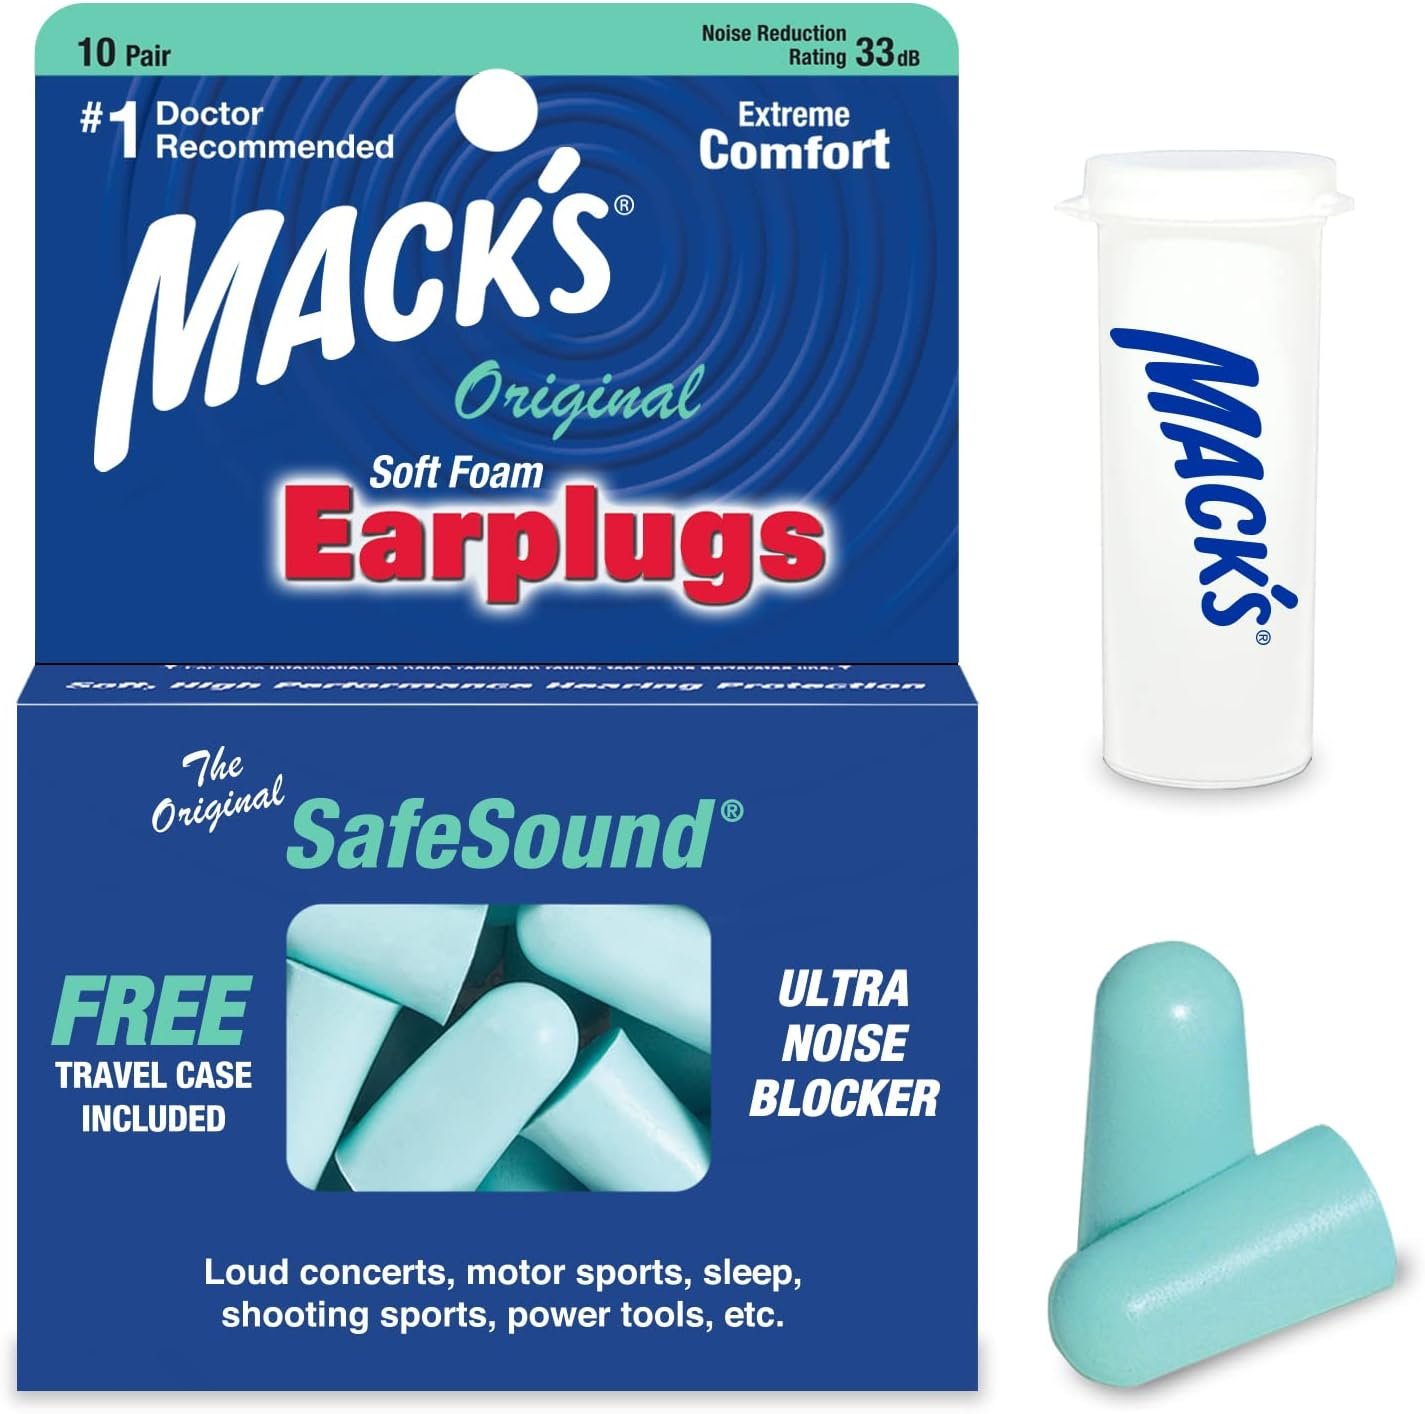 Protetor auricular da marca Mack's.